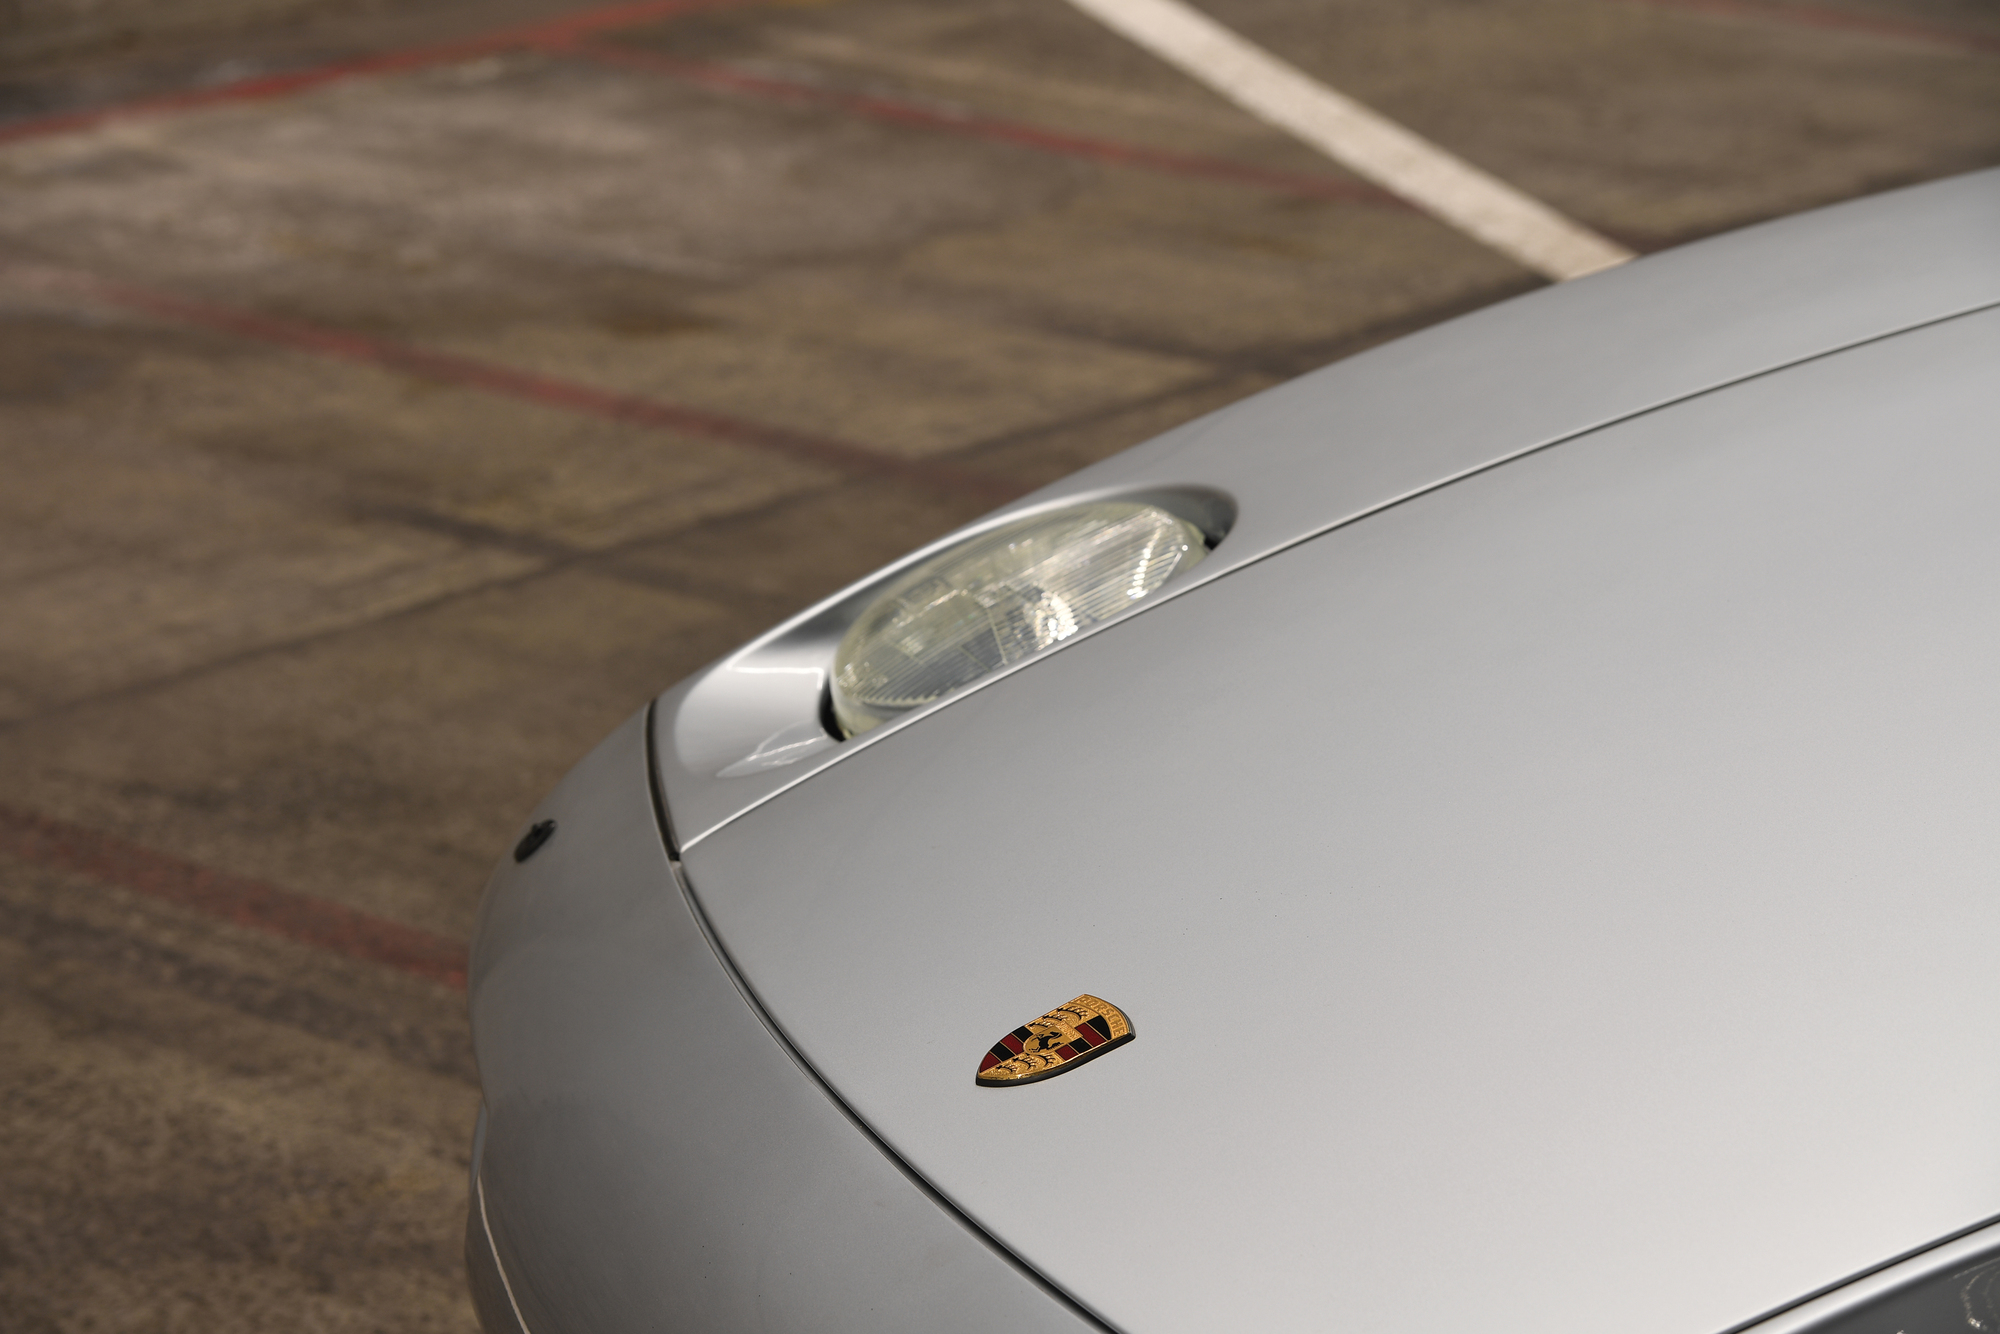 Porsche 928 圆形头灯平时收纳在车头内，使用时会向前推出，是极具特色的设计。